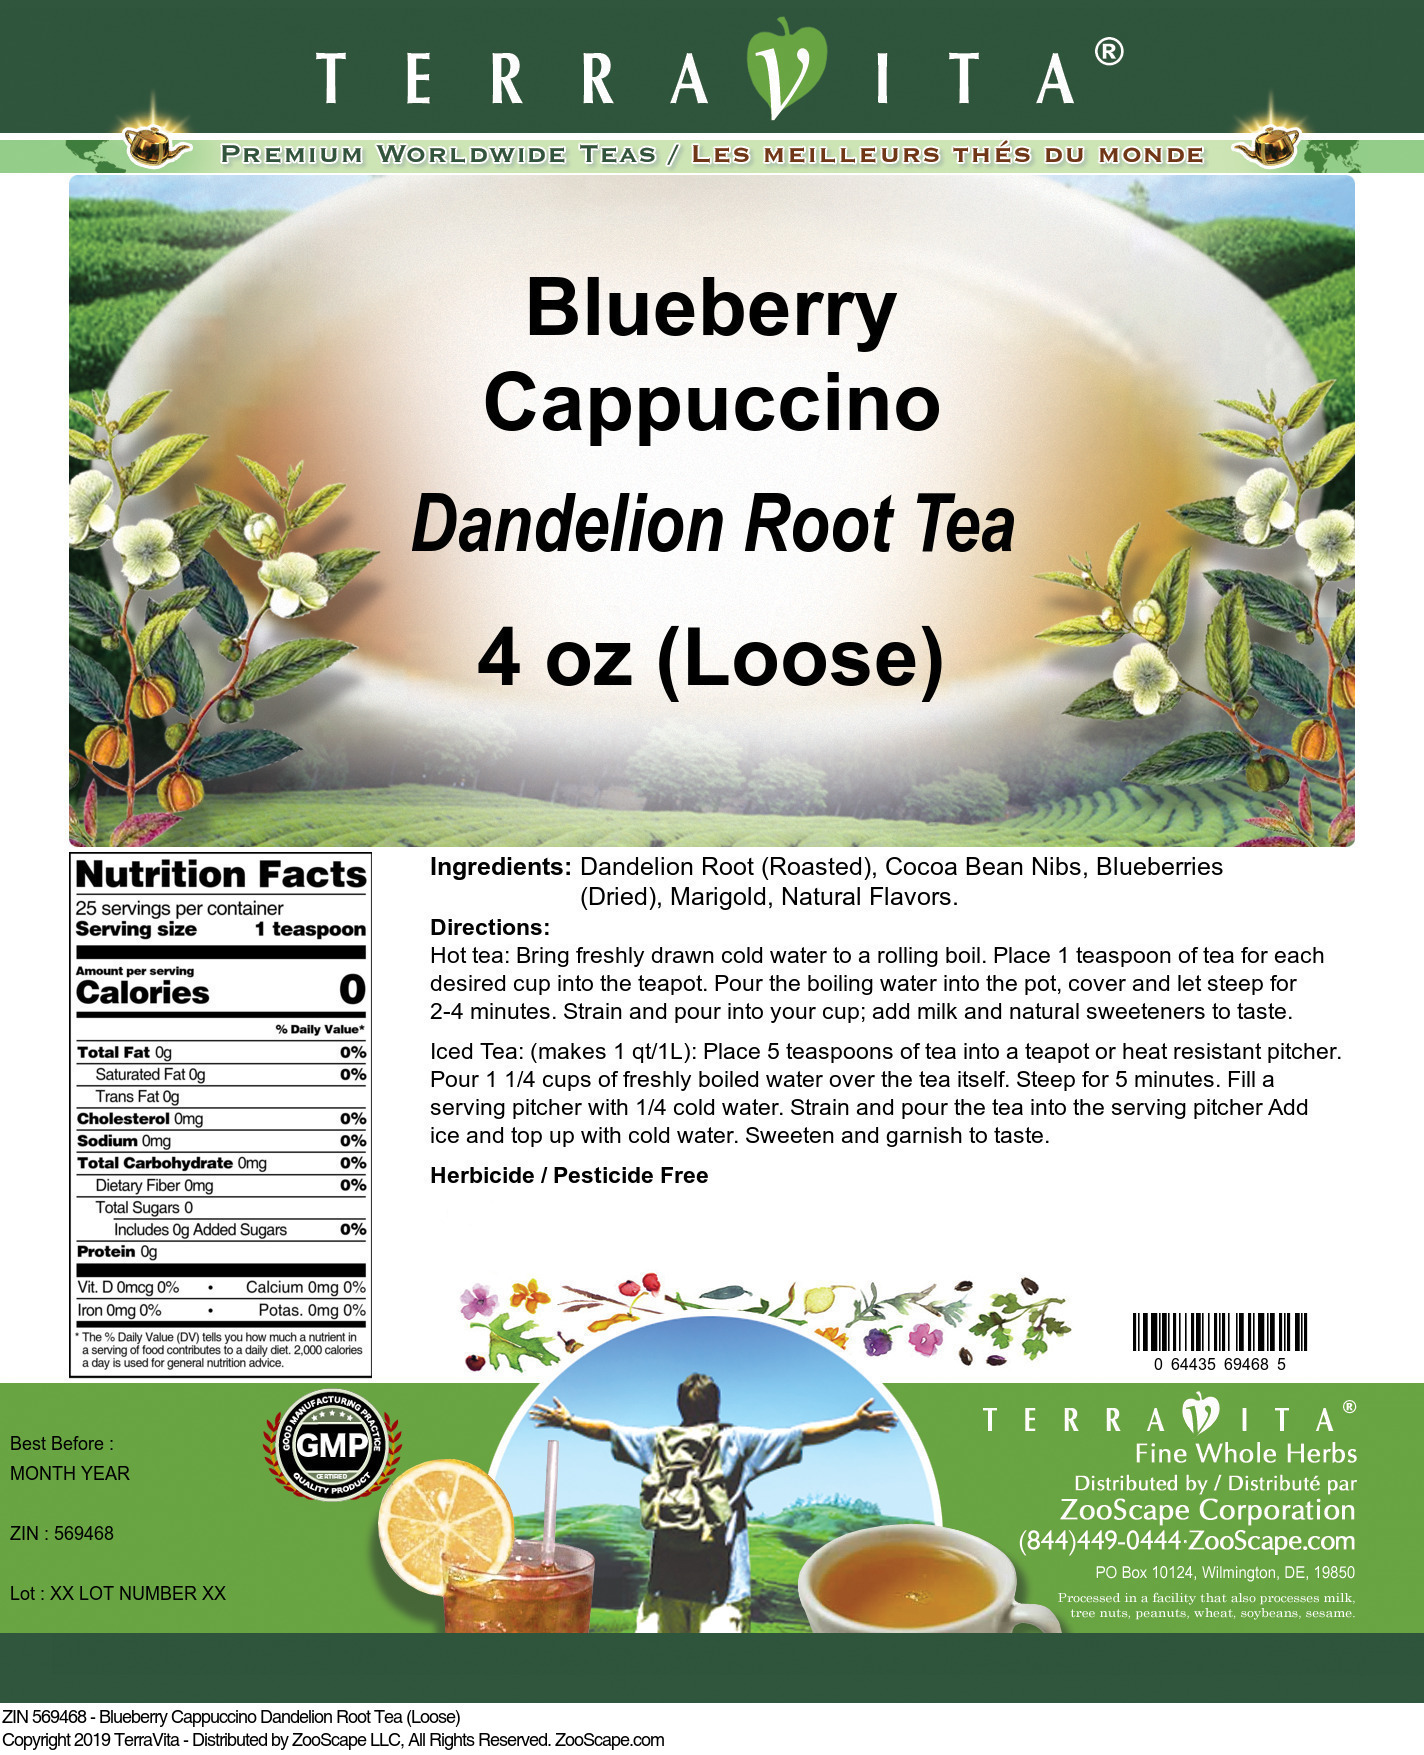 Blueberry Cappuccino Dandelion Root Tea (Loose) - Label